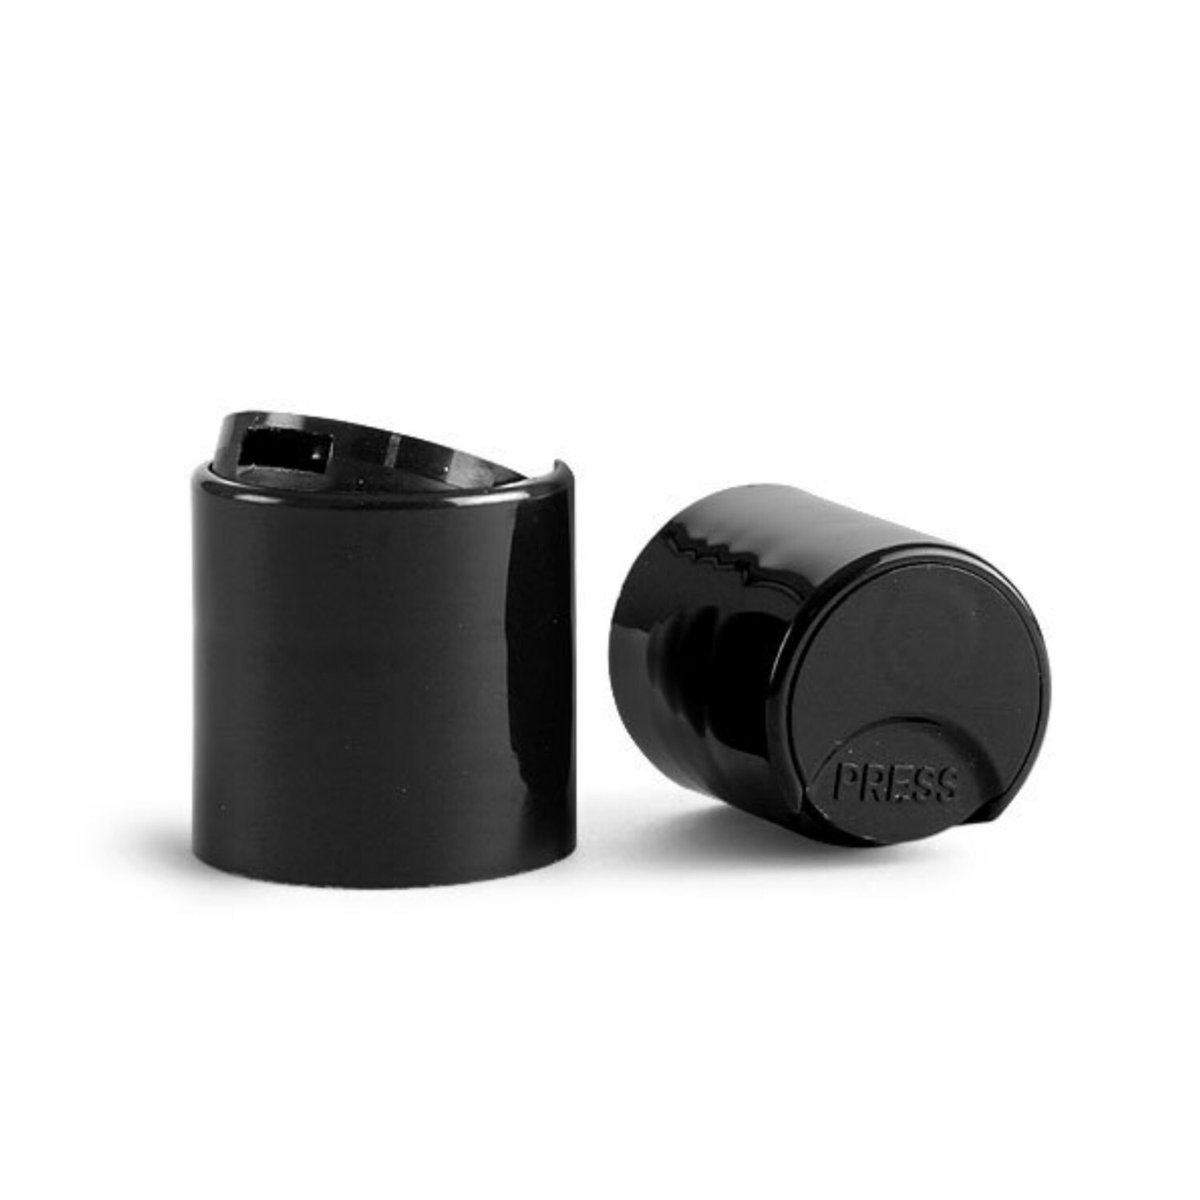 Black Unlined Disc Dispensing Caps - Bottle Cap Size: 24-410 - Set of 25 - BULK25 tuppu.net/987e96c9 #cosmetics #blackownedbusiness #beautysupply #bottles #DispensingCaps